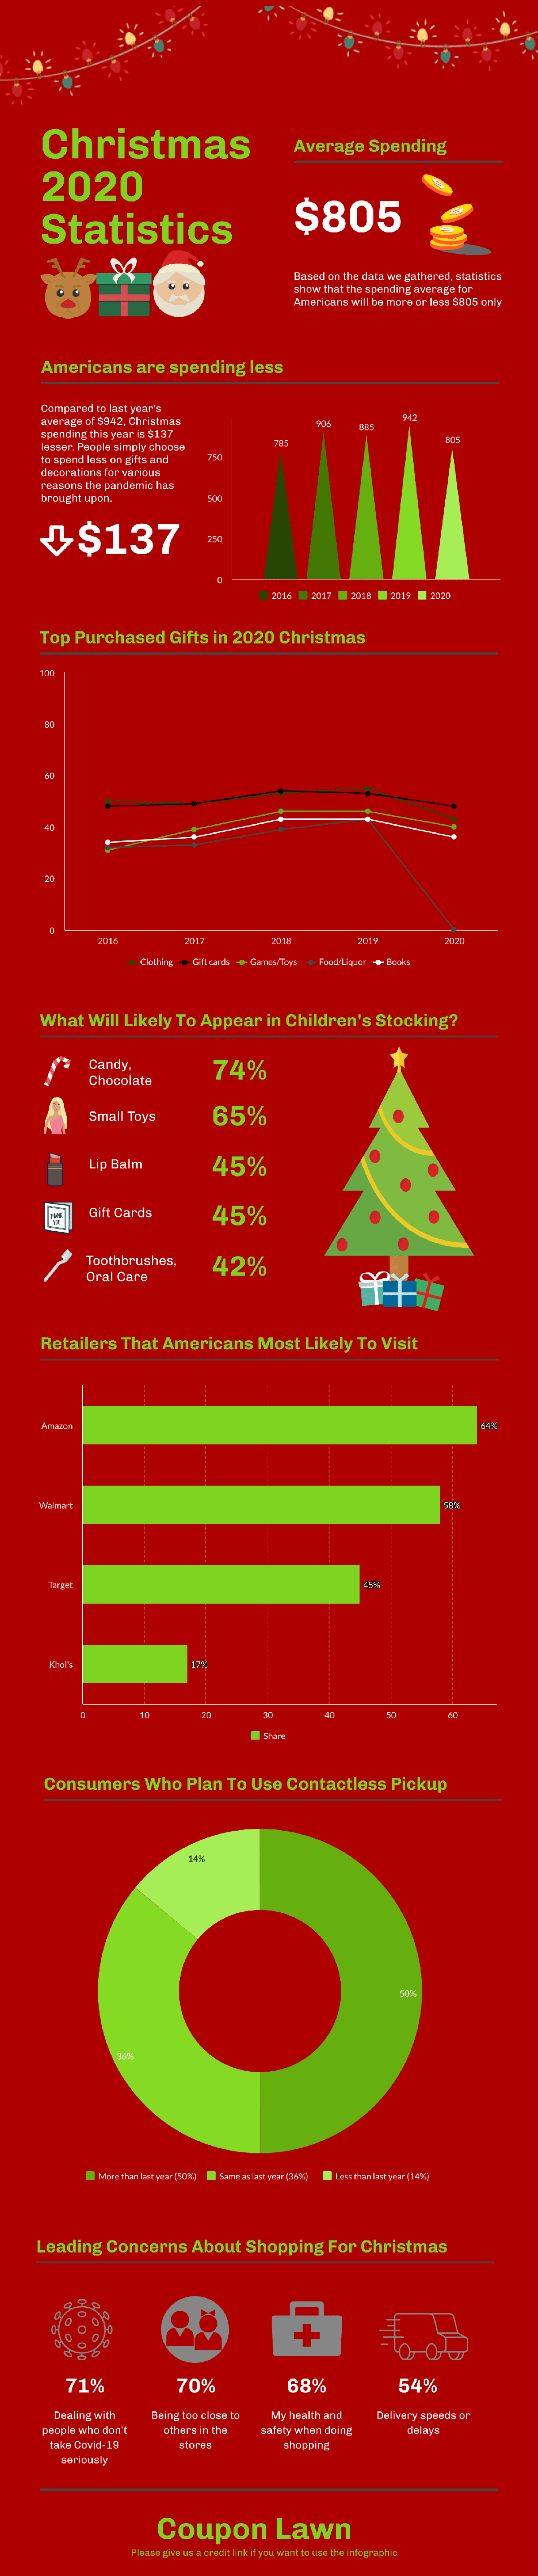 Christmas 2020 Statistics [Infographic]